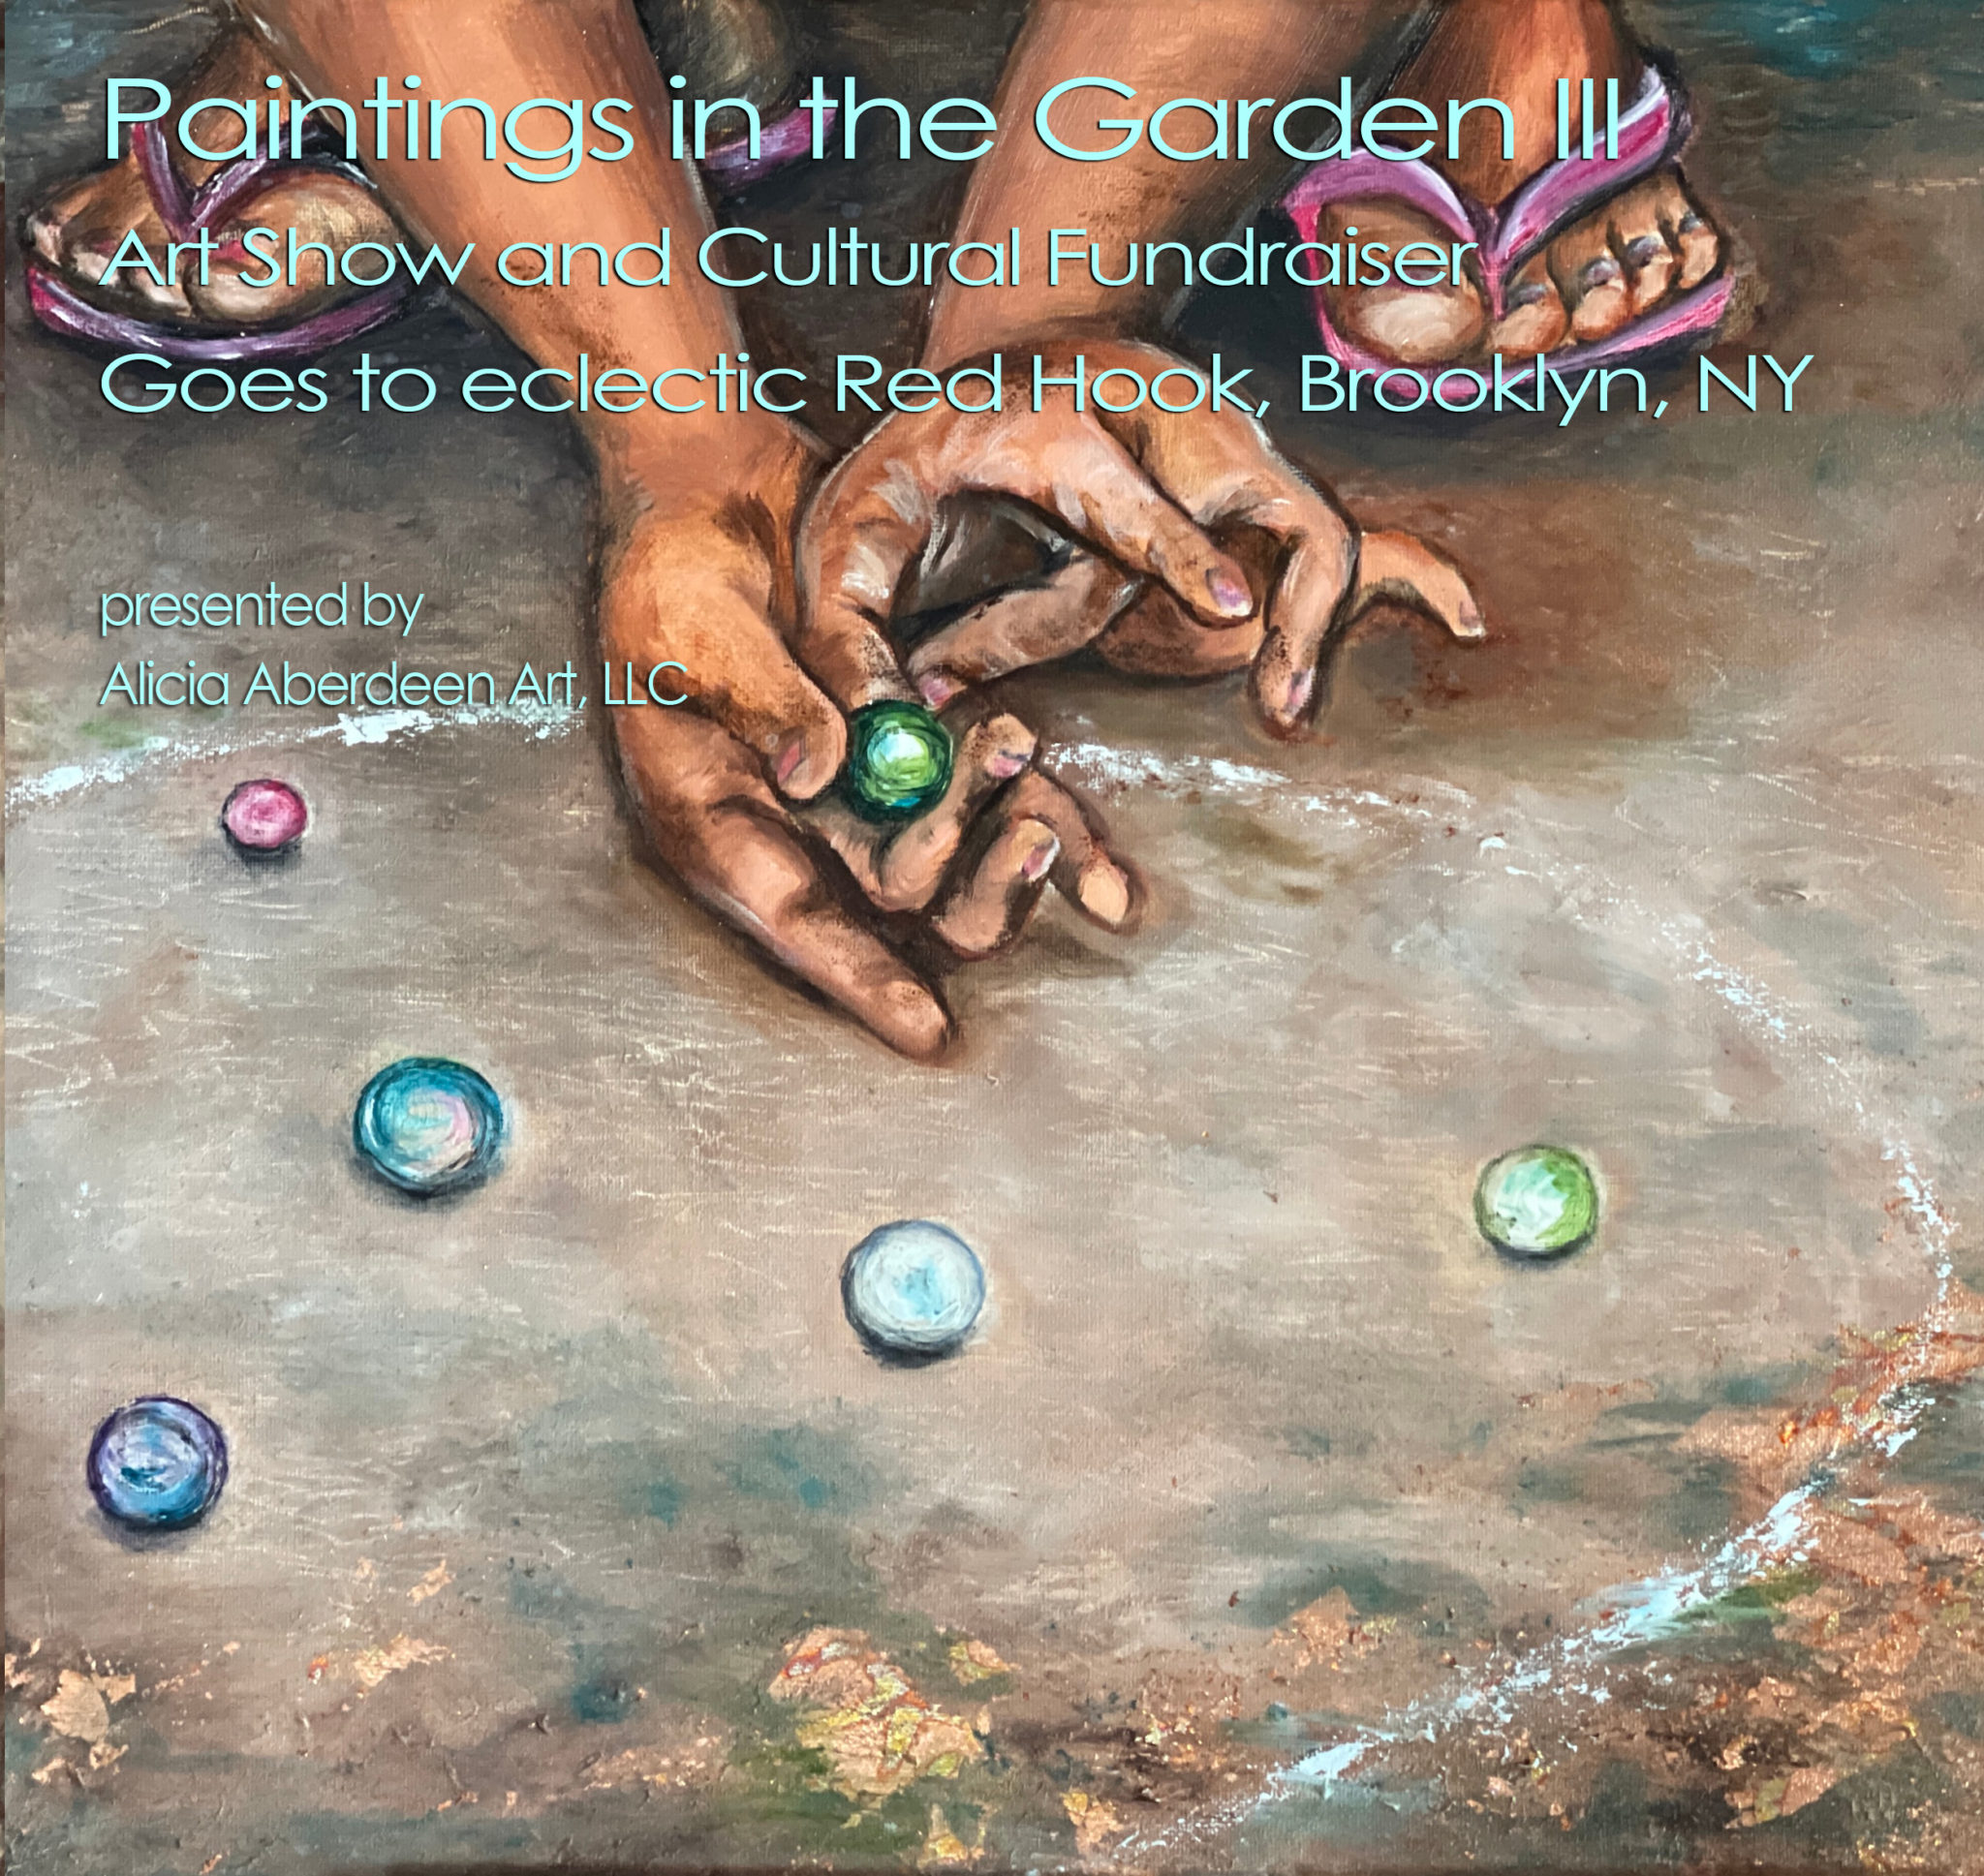 Paintings In The Garden III, an Art Fundraiser Promoting Caribbean Art